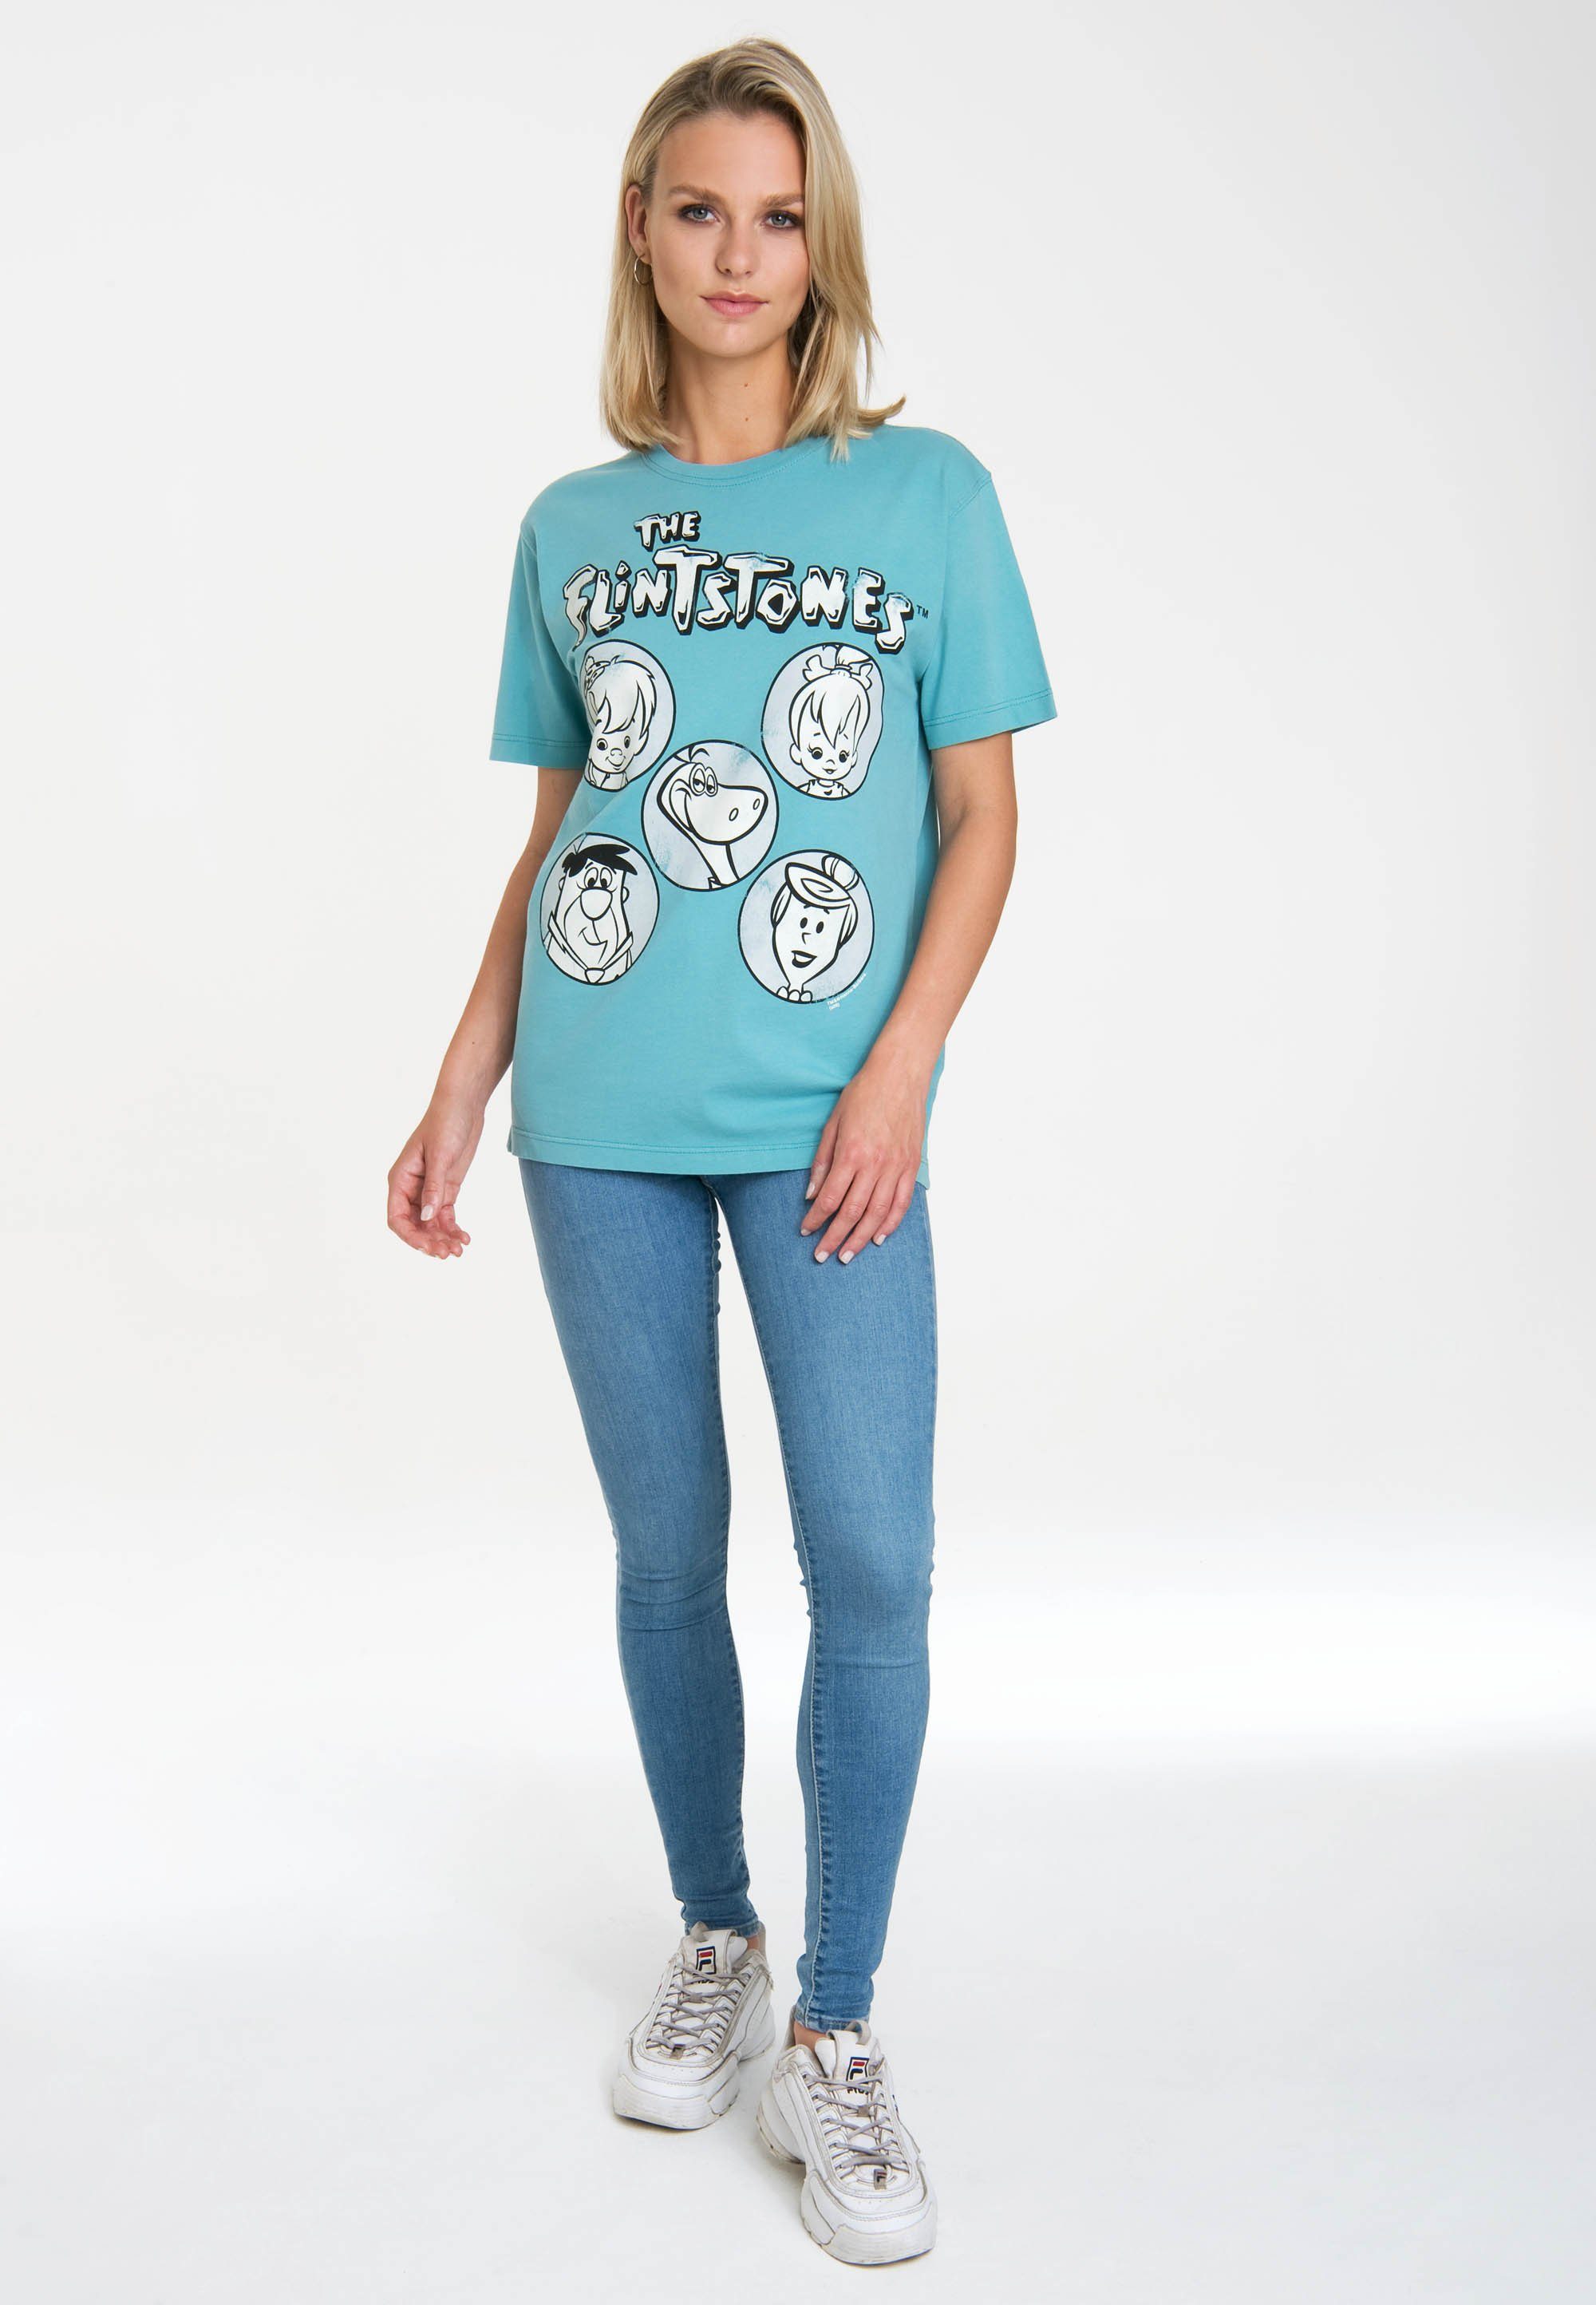 LOGOSHIRT Flintstones The T-Shirt mit Originaldesign lizenziertem